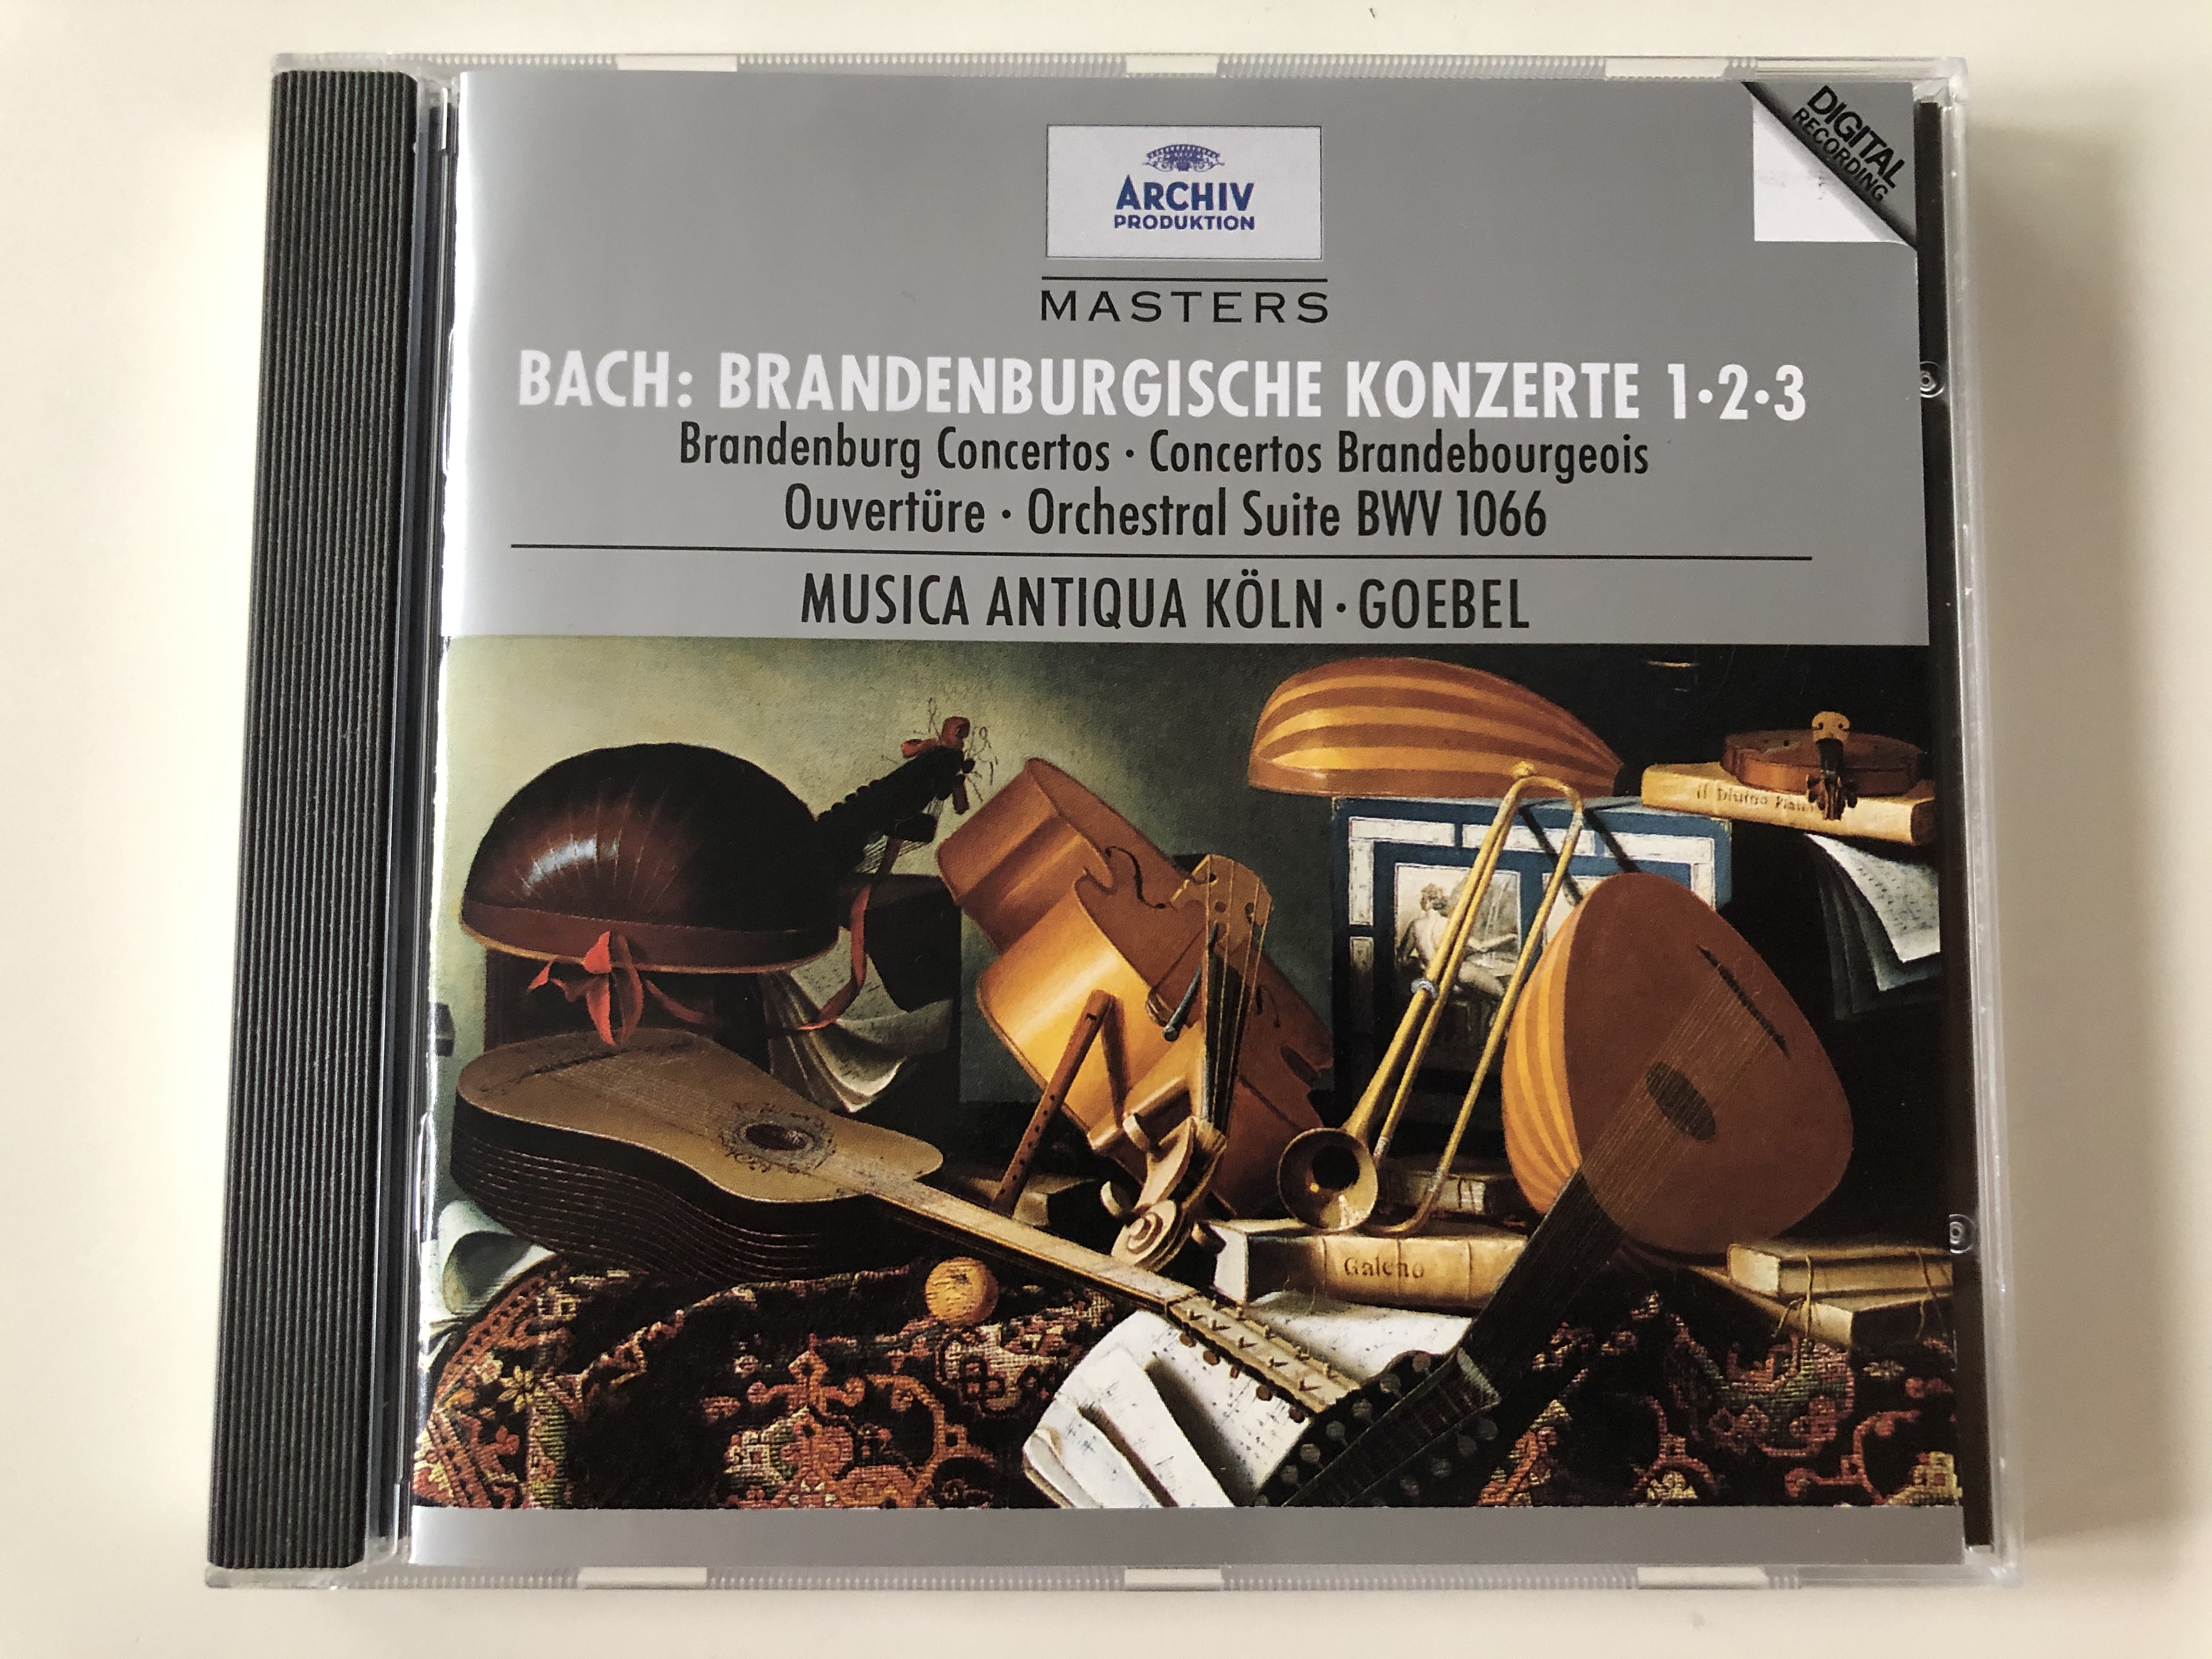 bach-brandenburgische-konzerte-1-2-3-brandenburg-concertos-ouverture-orchestral-suite-bwv-1066-musica-antiqua-k-ln-goebel-archiv-produktion-audio-cd-stereo-447-287-2-1-.jpg